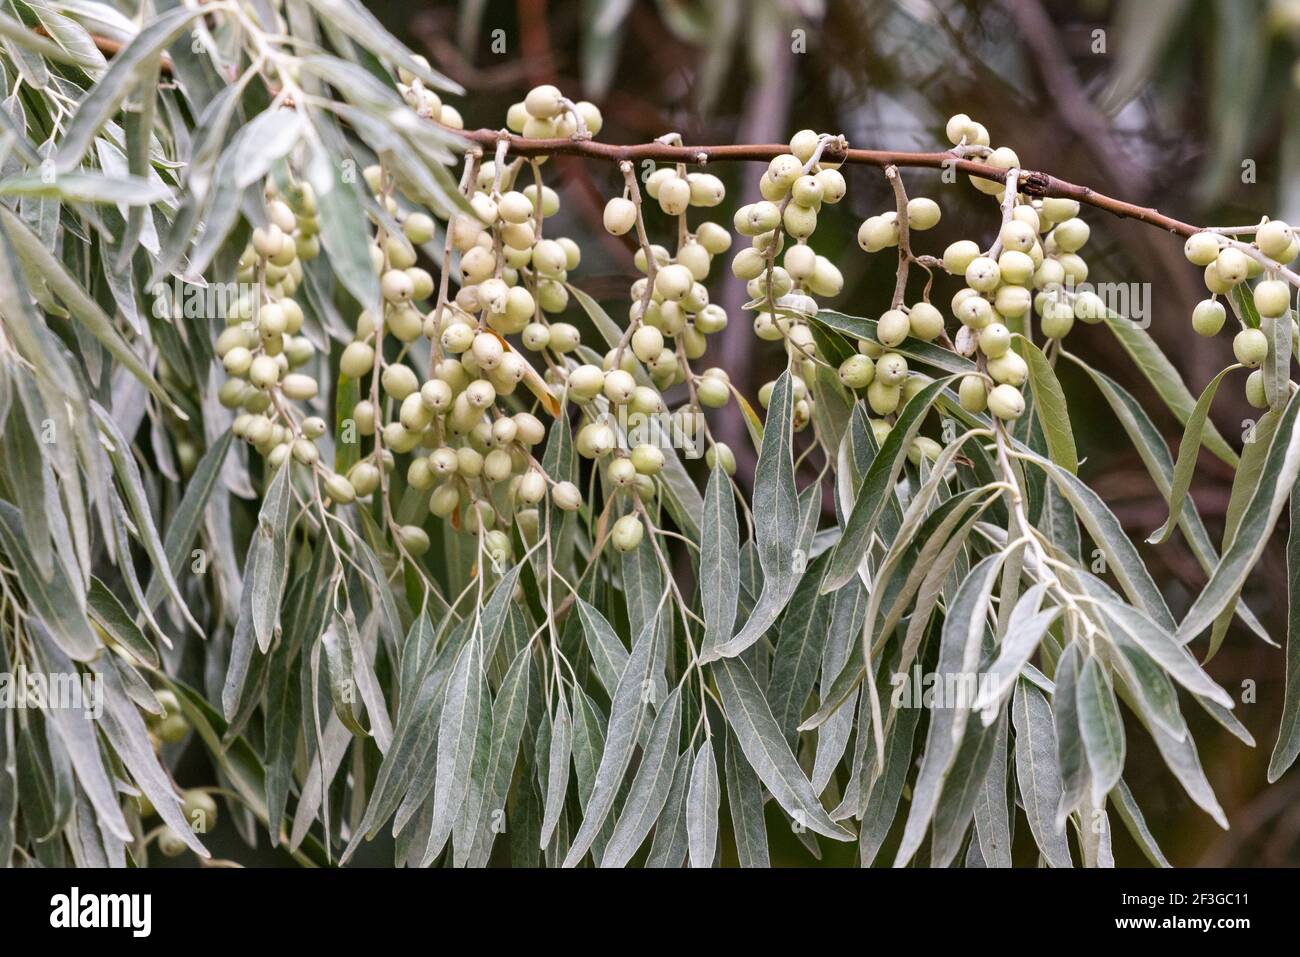 Elaeagnus commutata. Loch silver. Branch with unripe berries. Stock Photo